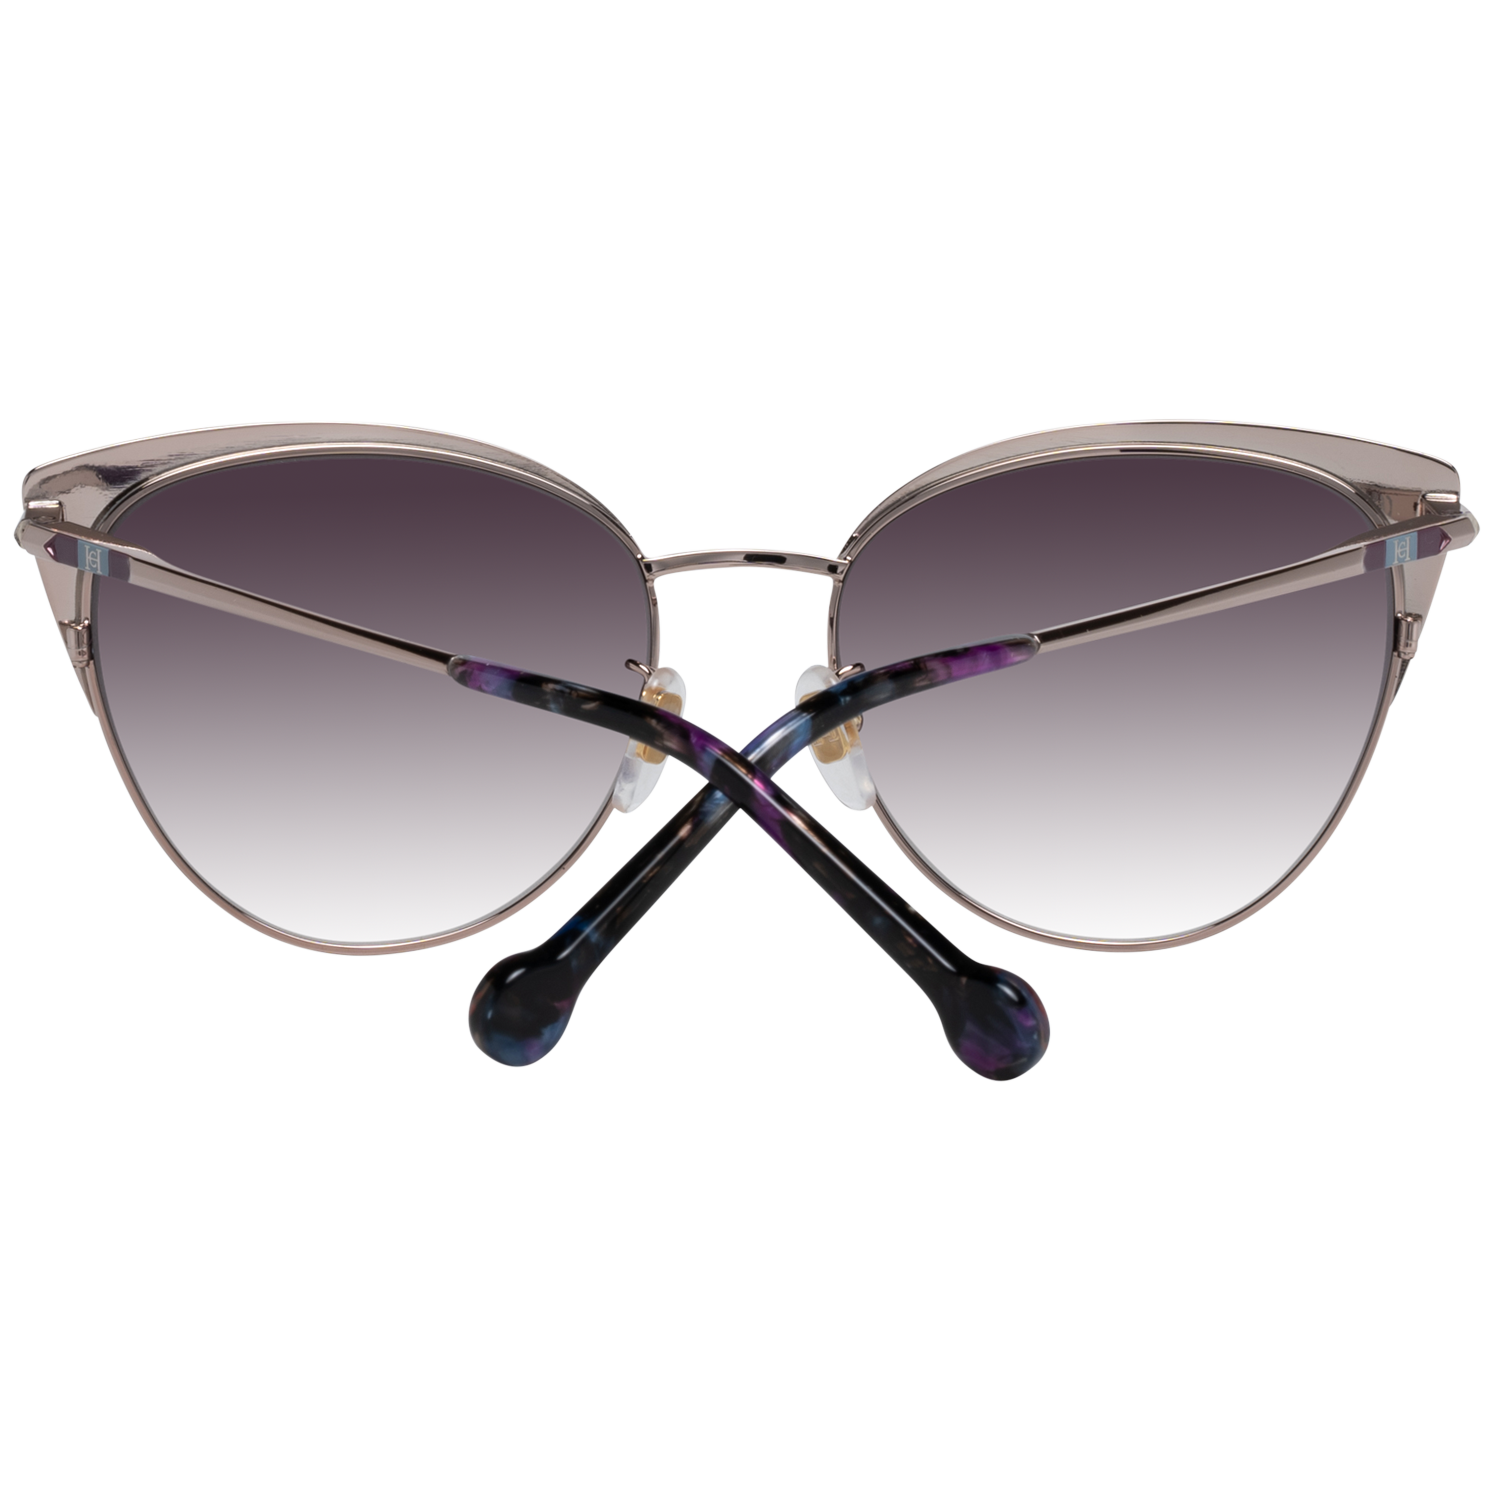 Carolina Herrera Sunglasses Carolina Herrera Sunglasses SHE177 H60 55 Eyeglasses Eyewear UK USA Australia 